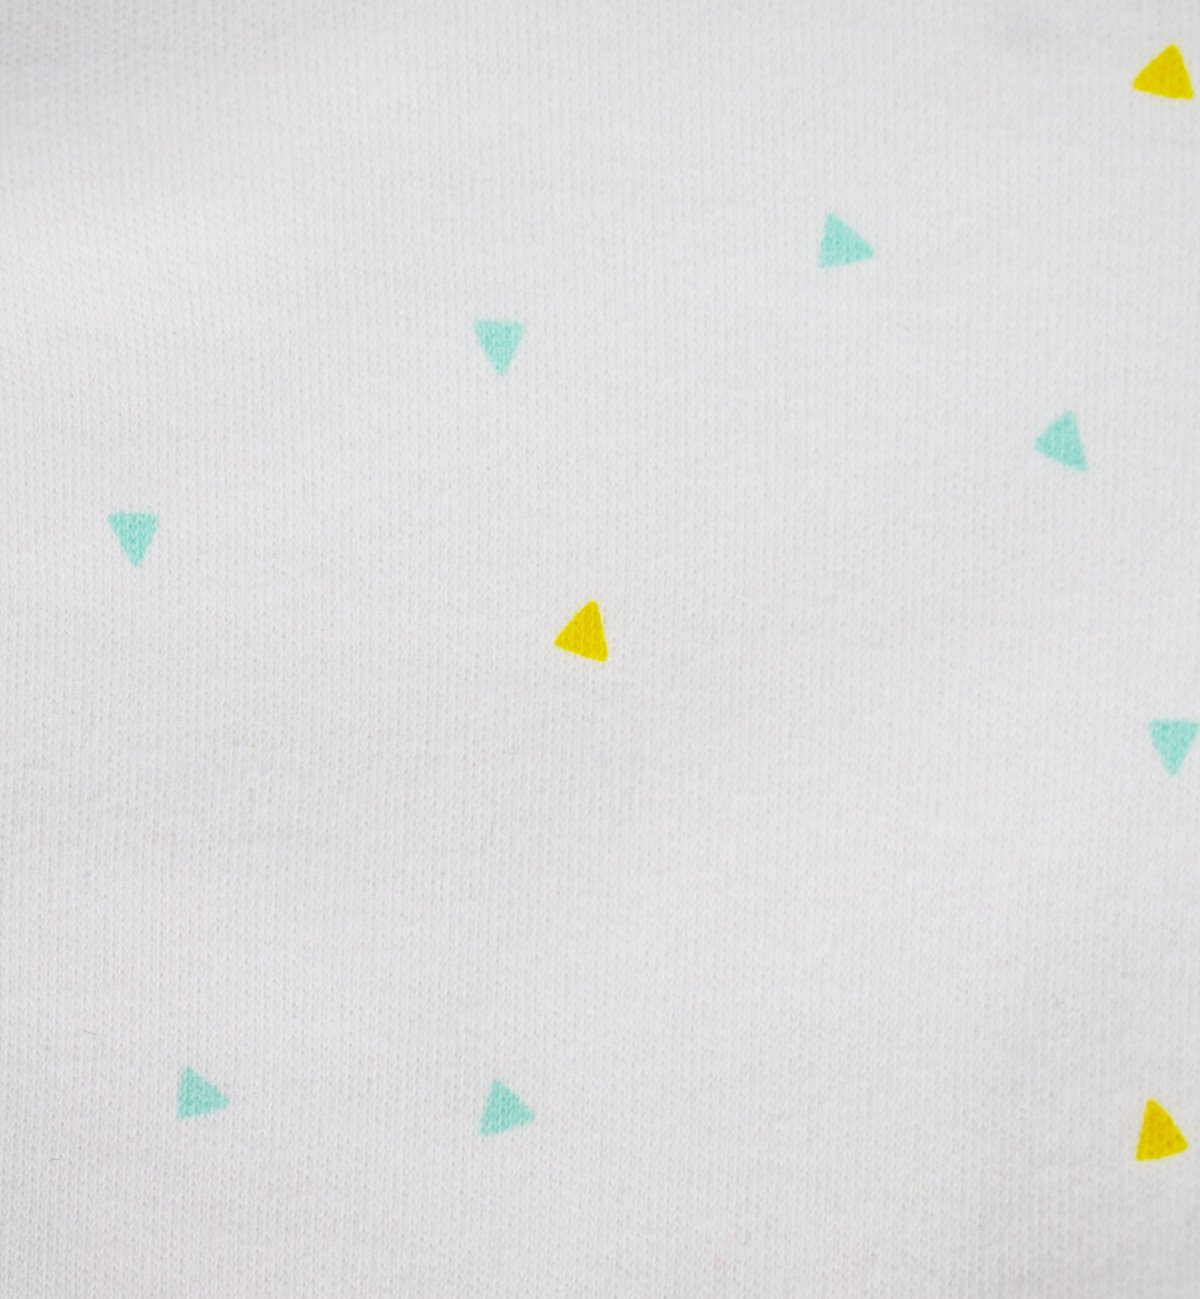 Summer baby pyjamas in Organic Cotton jersey with Kadolis triangles motifs